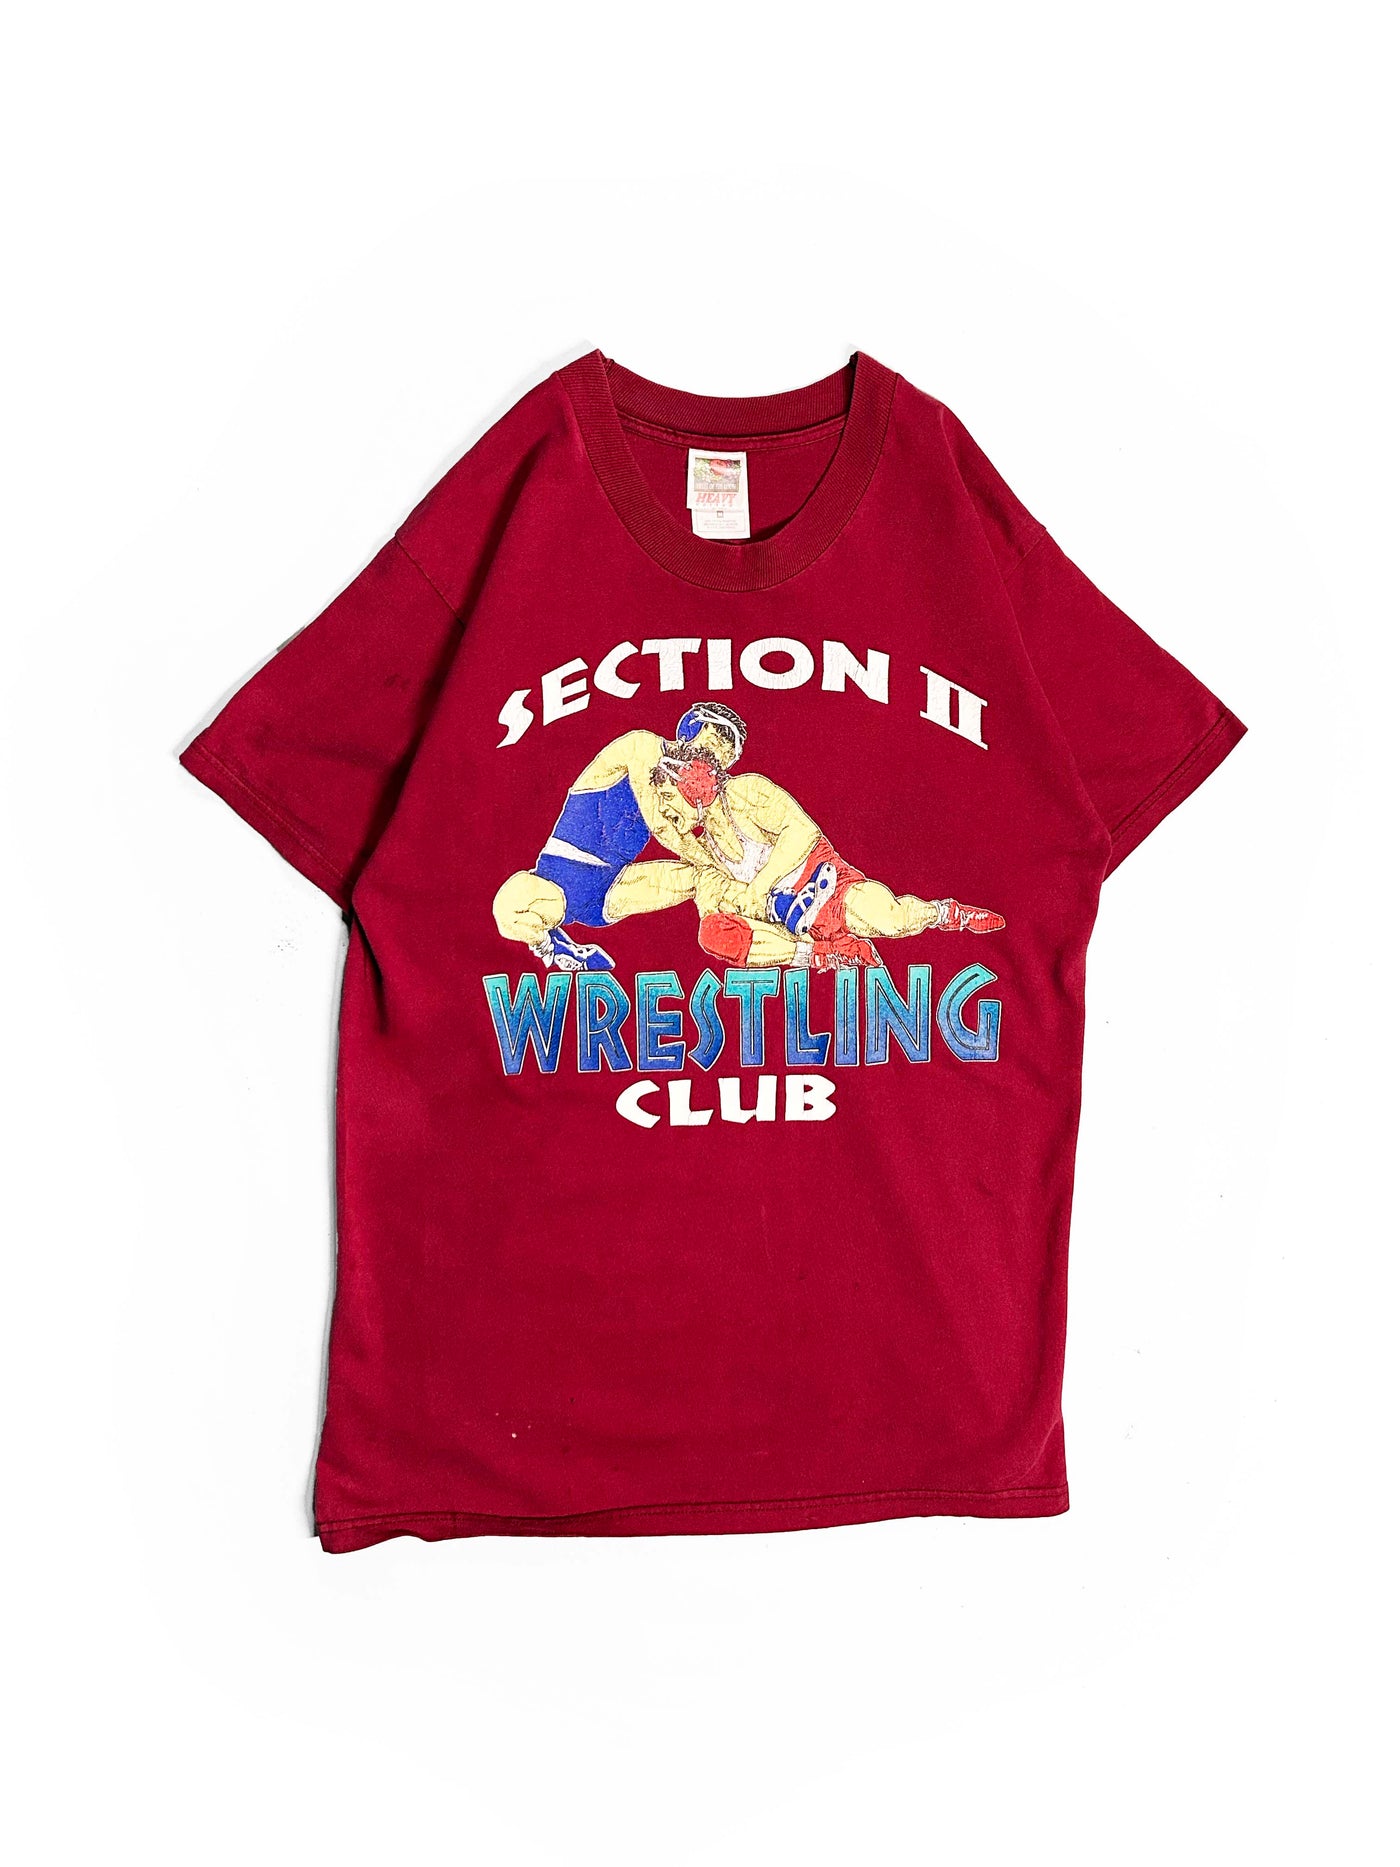 Vintage 1998 Section 2 Wrestling Club T-Shirt